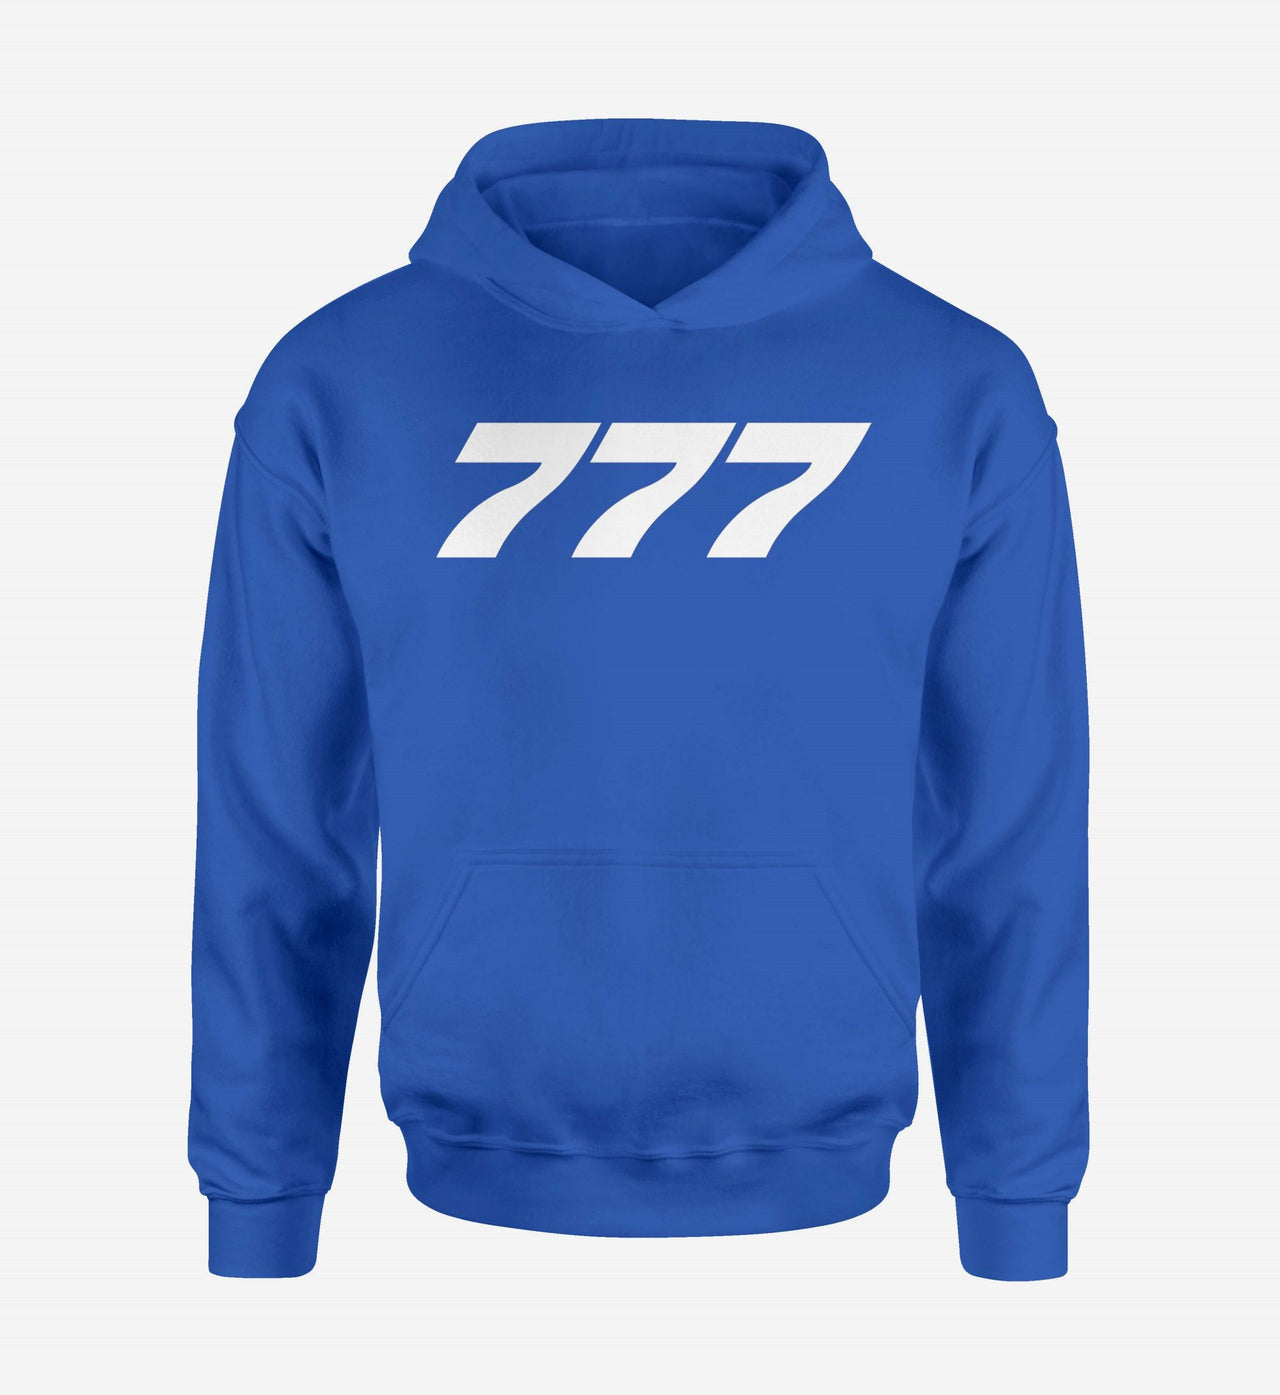 777 Flat Text Designed Hoodies